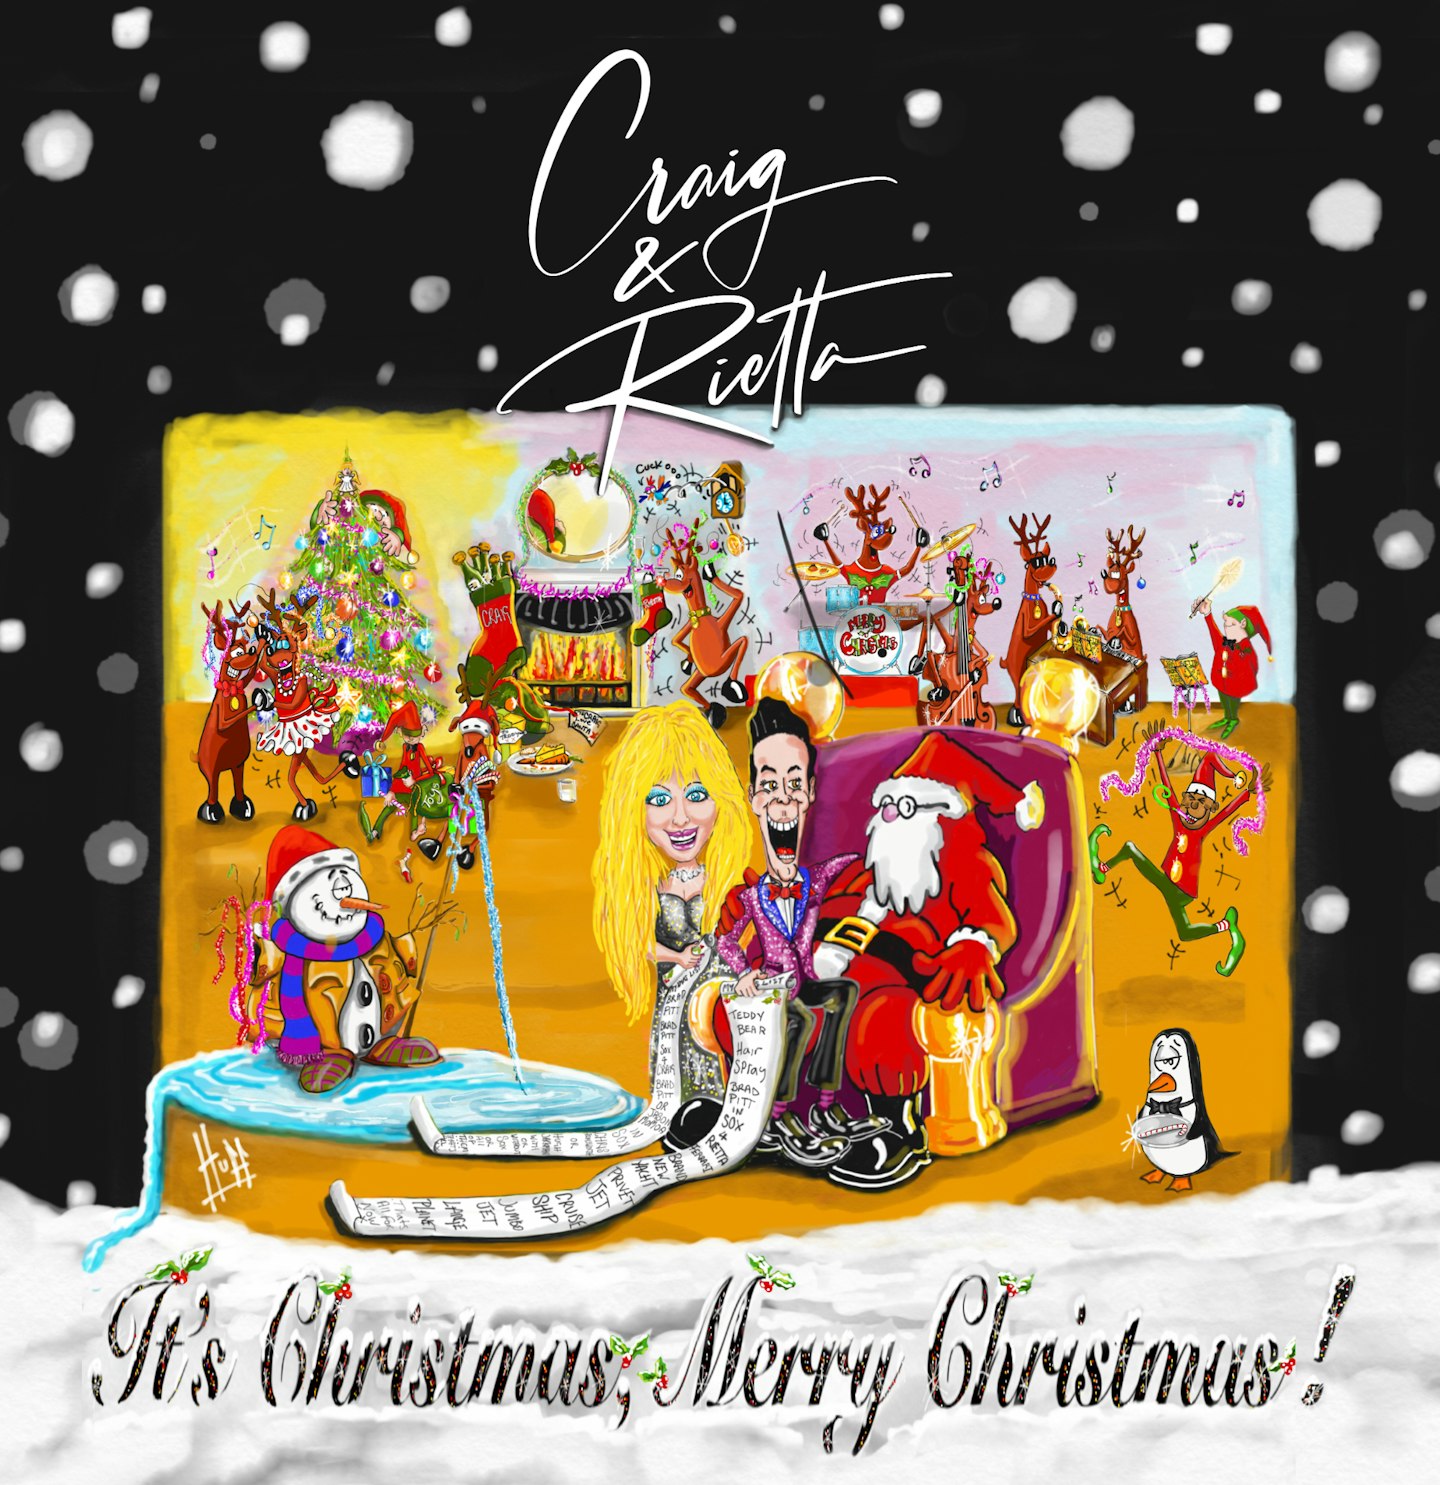 Craig Revel Horwood and Rietta Austin's It's Christmas, Merry Christmas!